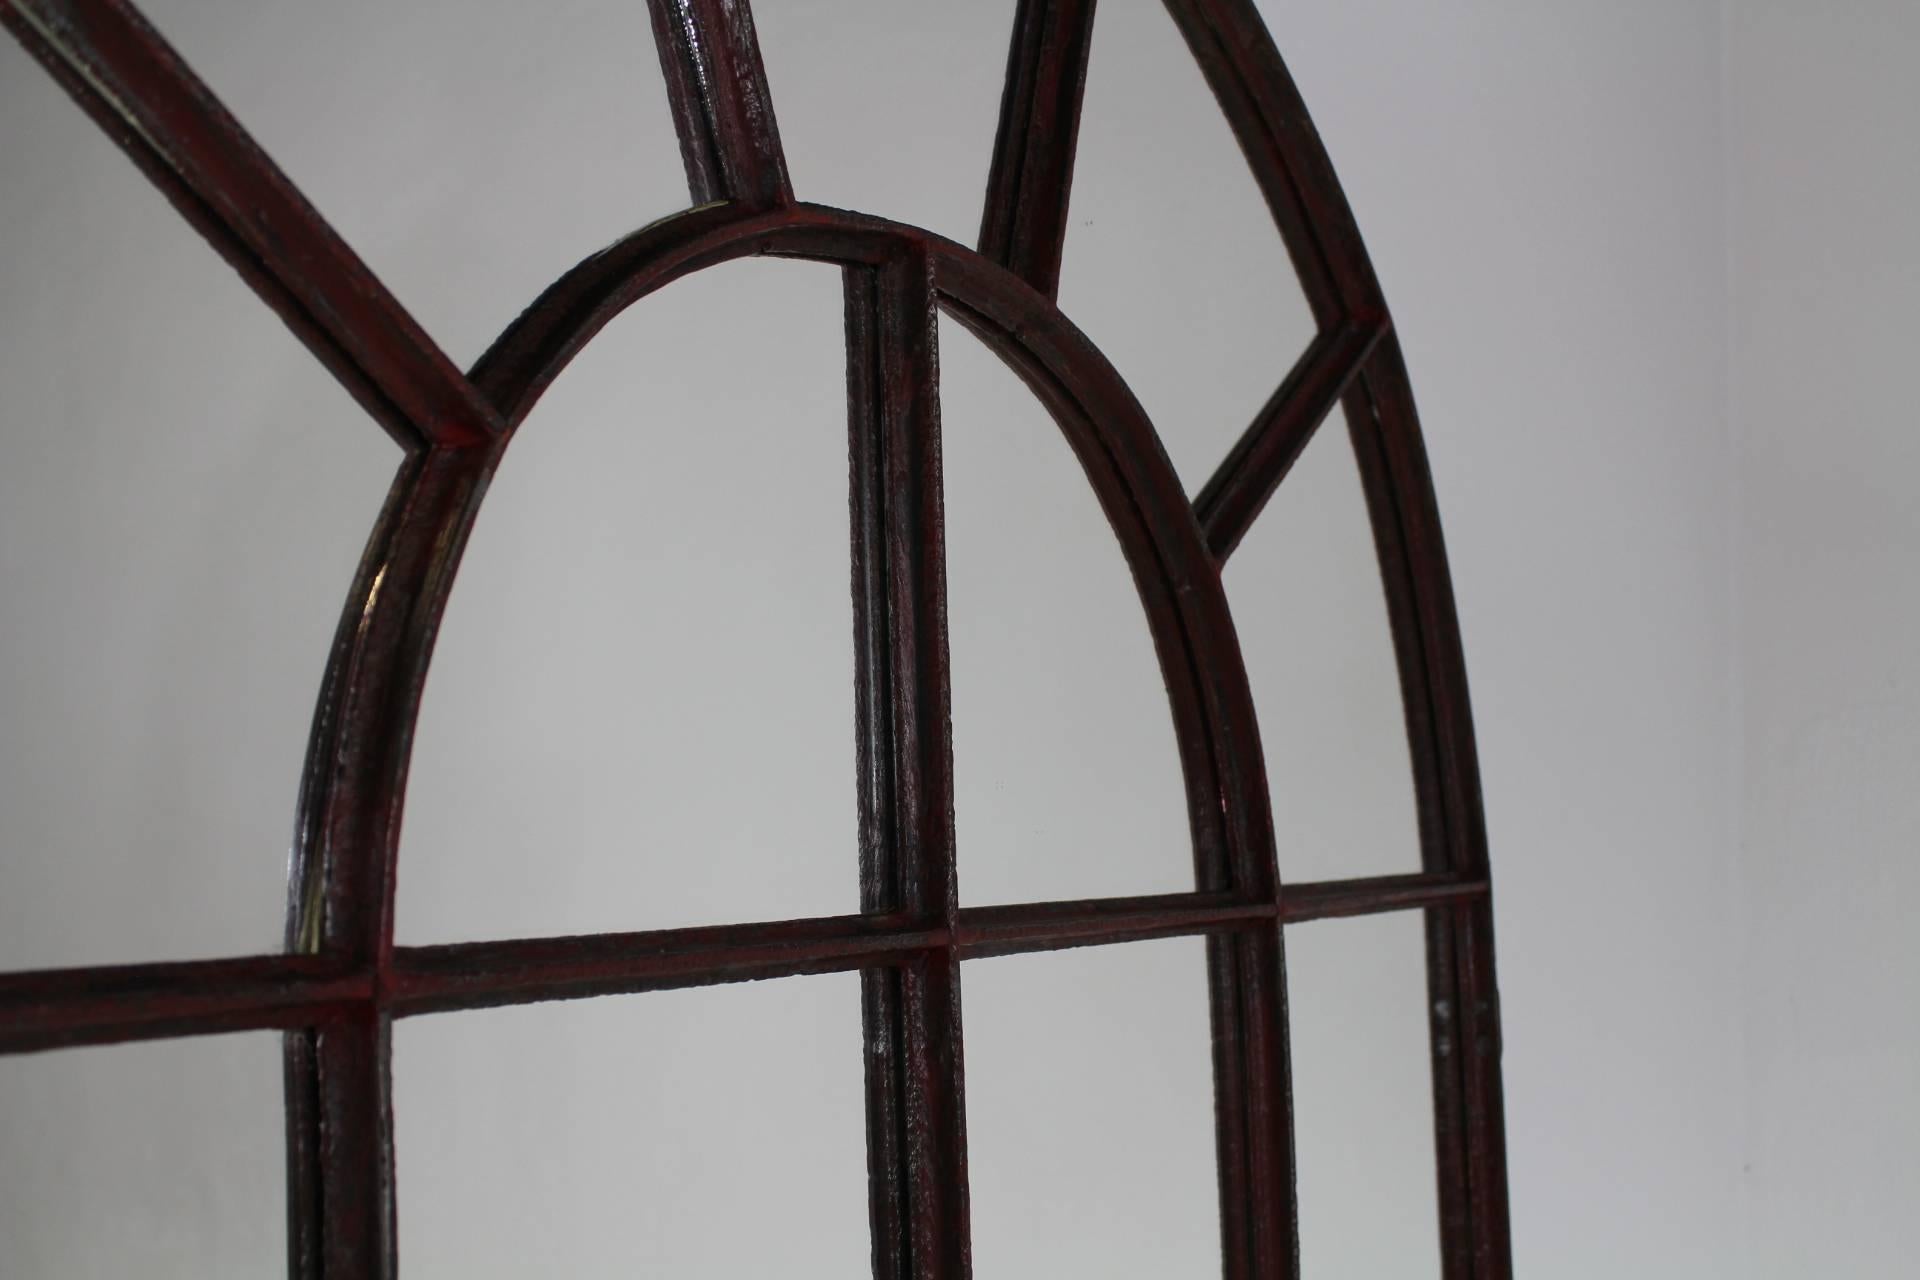 European 19th Century Industrial Iron Window Frame Mirror, 2 pieces available